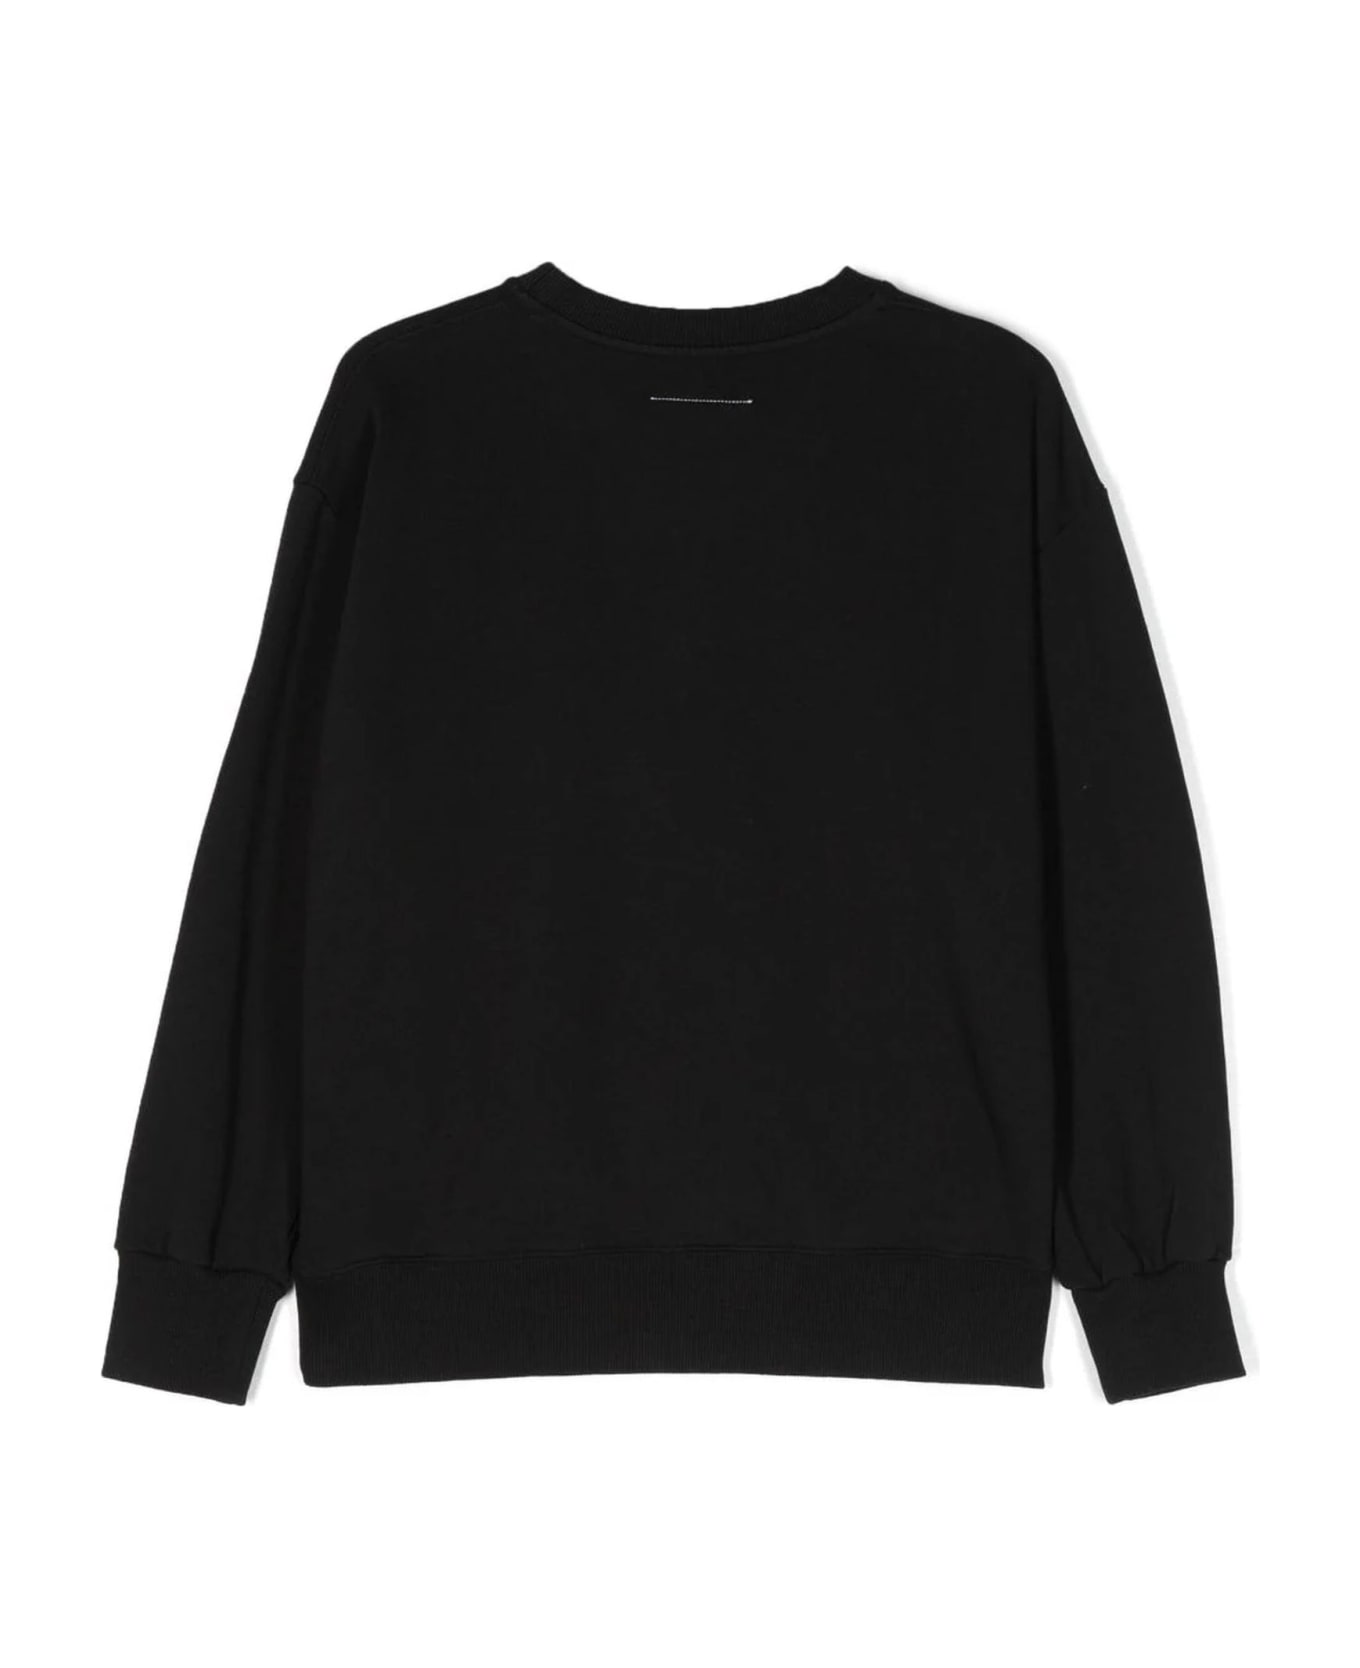 Maison Margiela Sweaters Black - Black